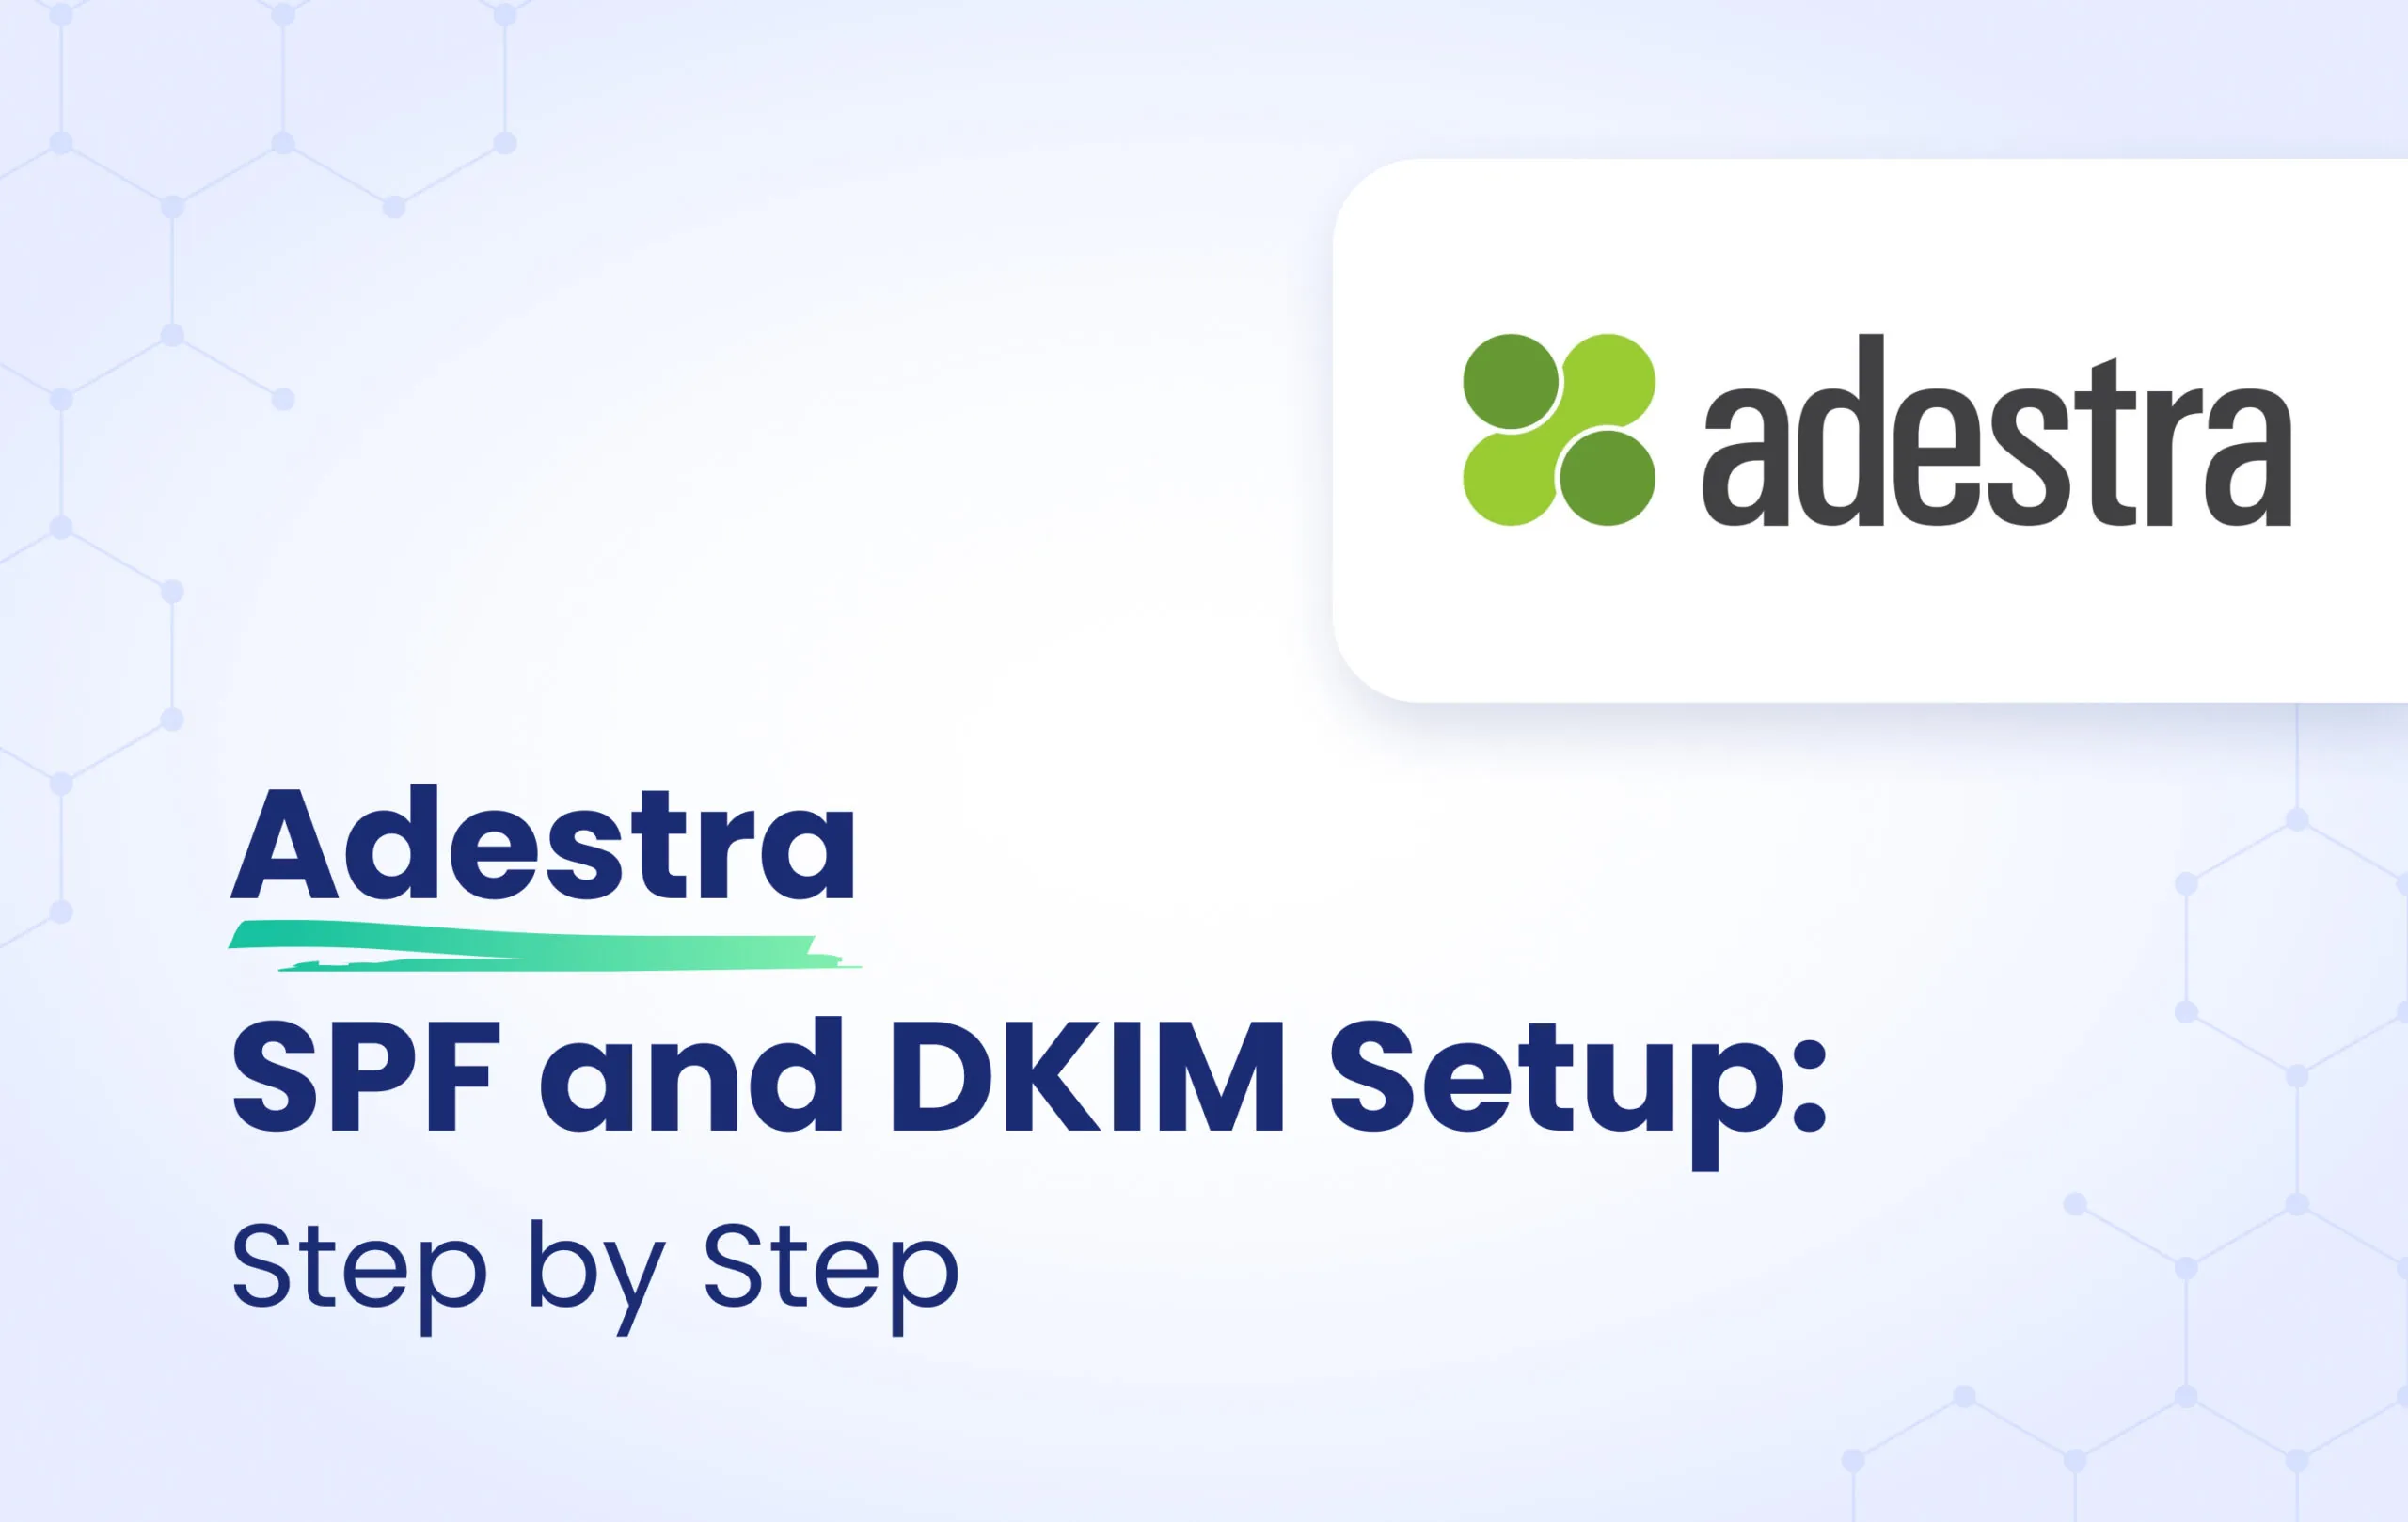 Adestra SPF and DKIM configuration